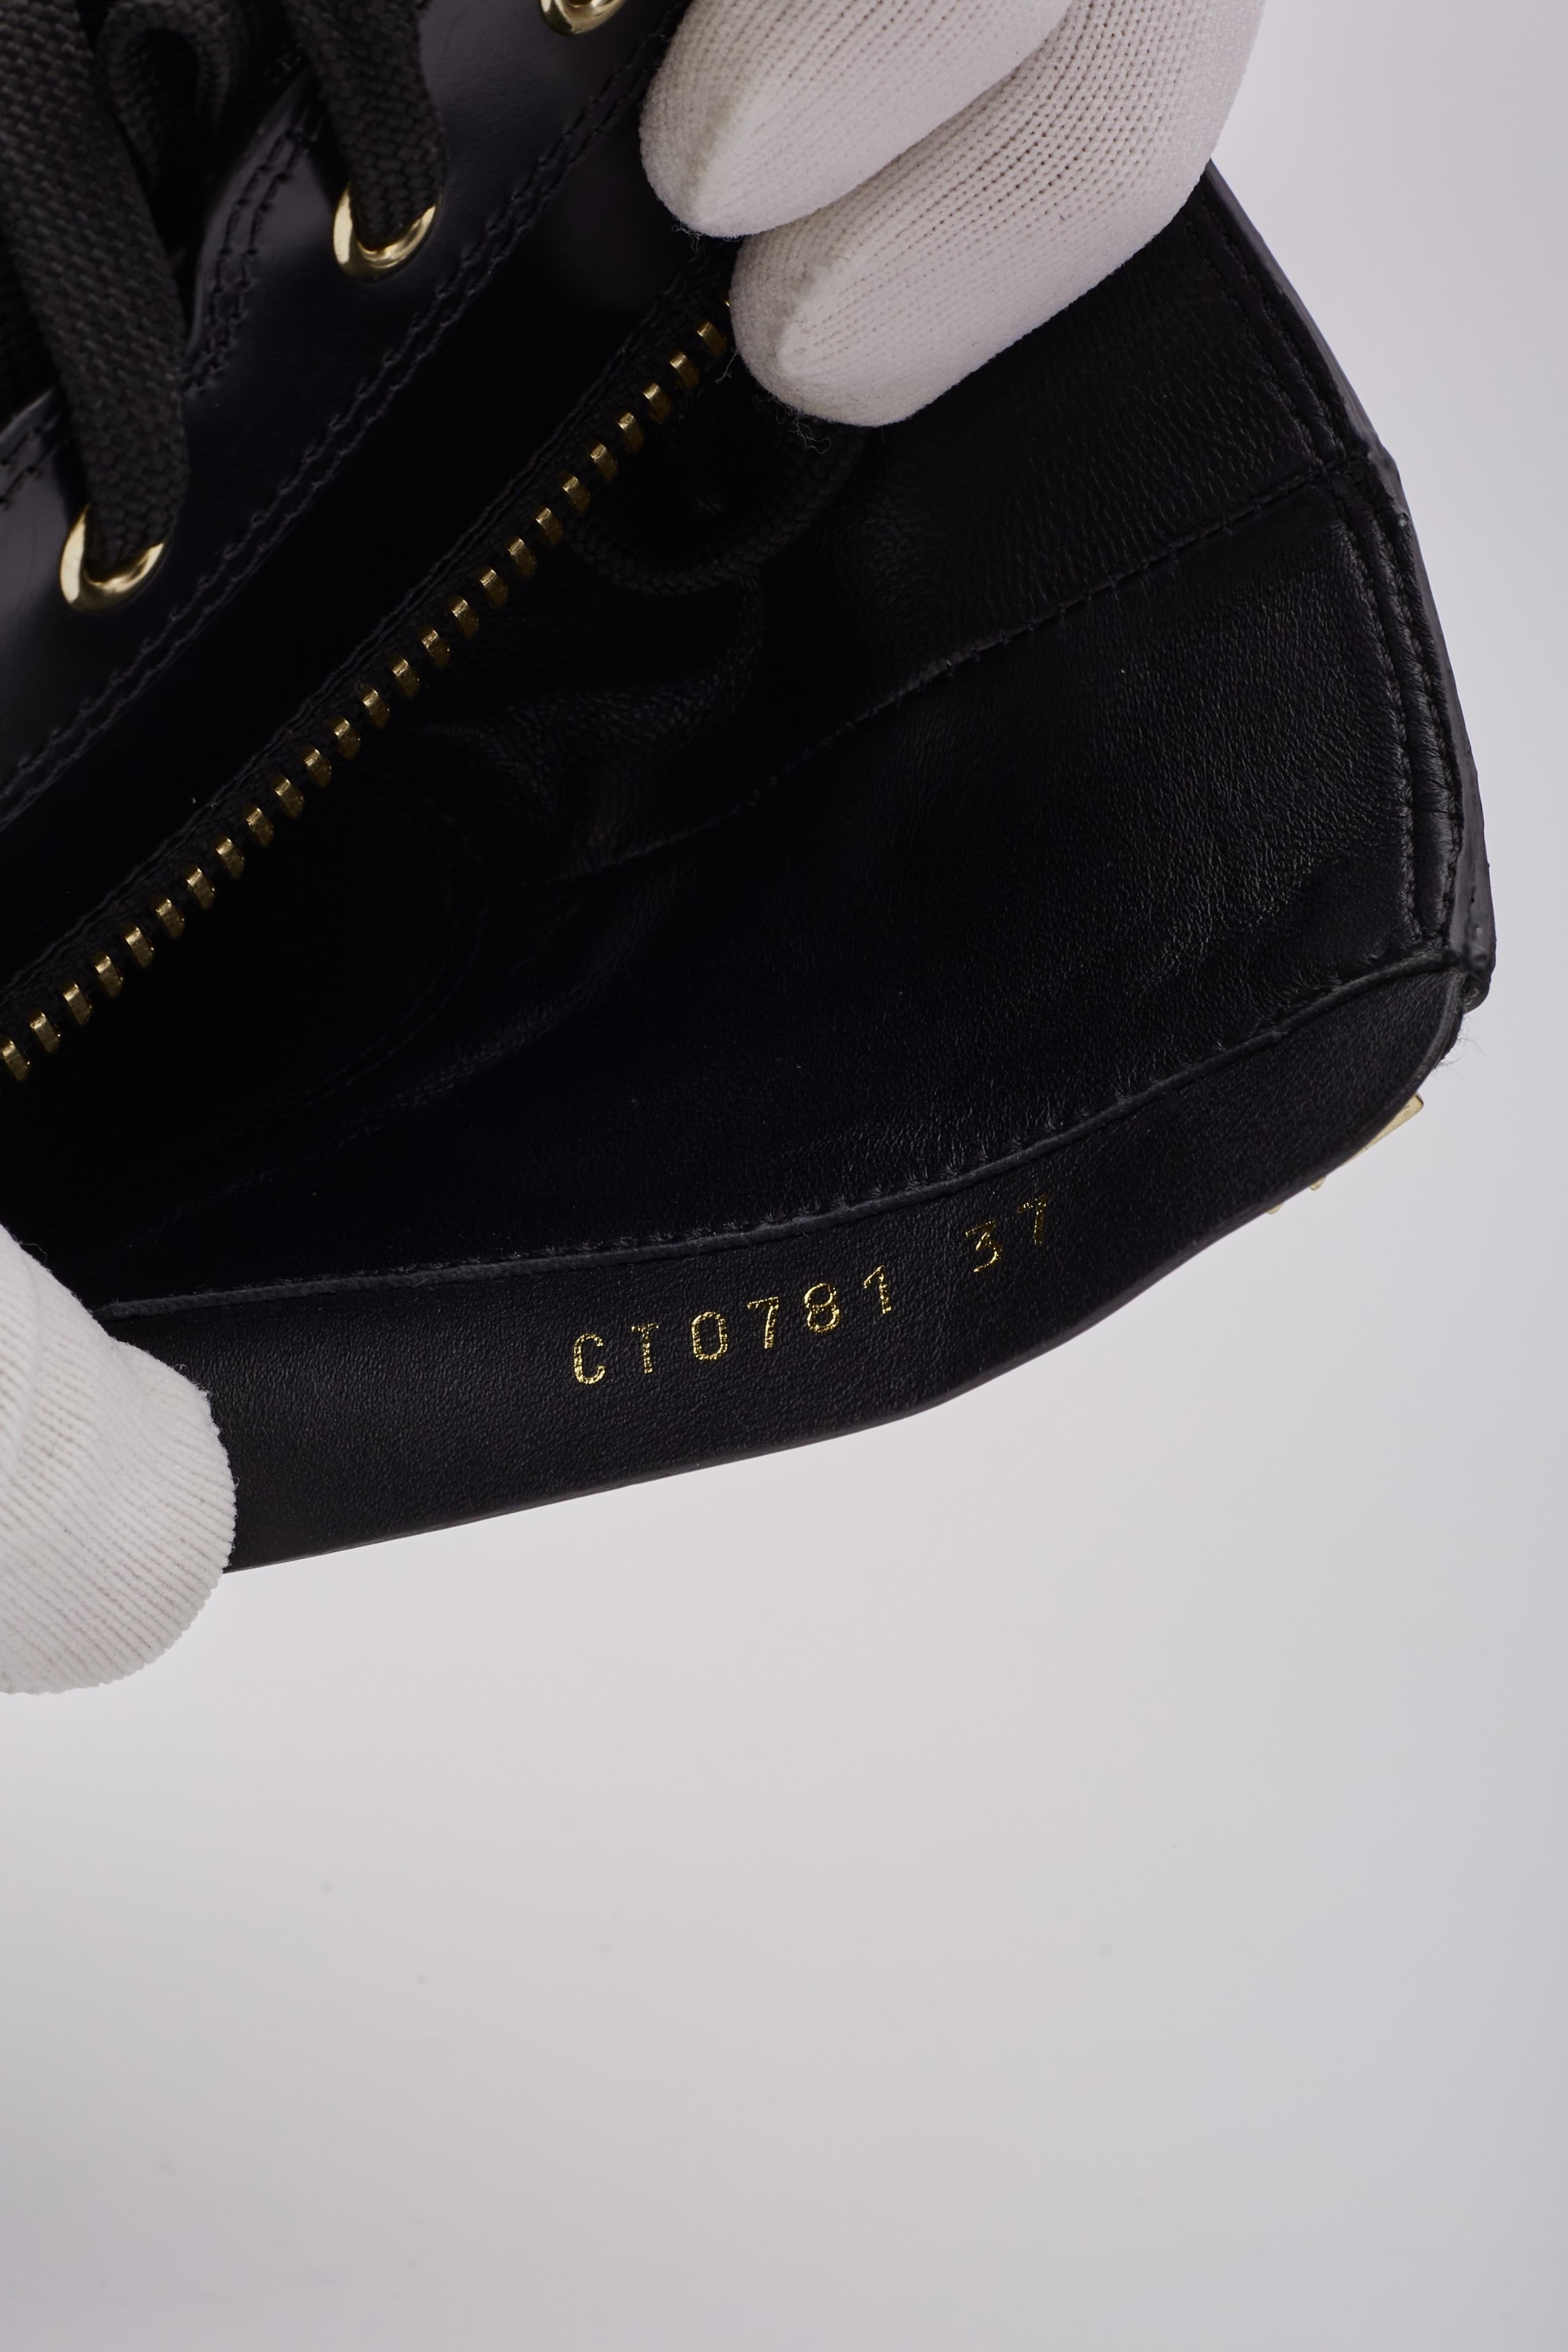 Dolce & Gabbana Logo Charm Black Leather Platform Ankle Boots For Sale 4